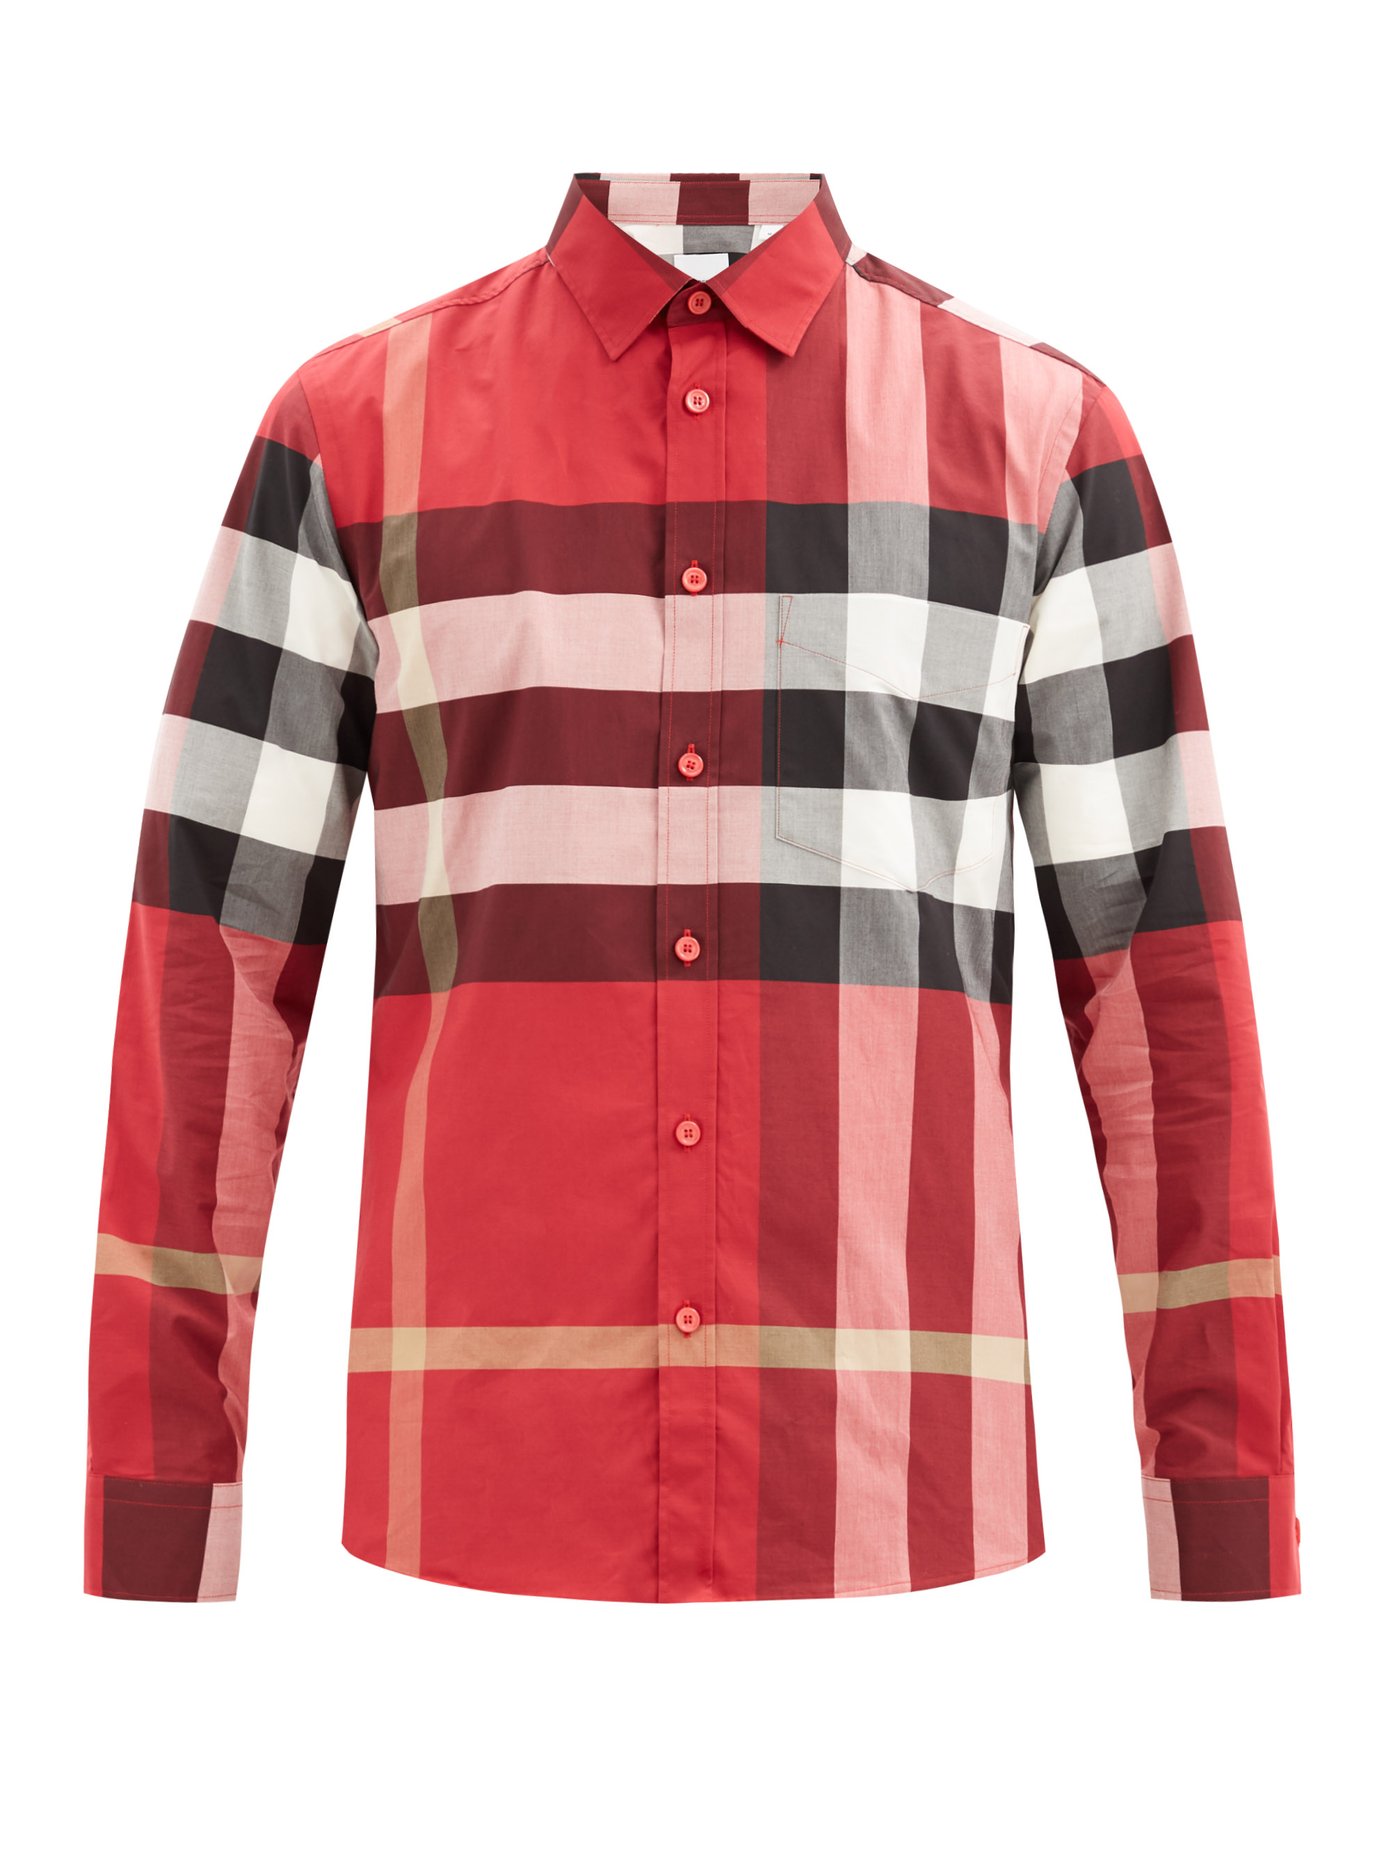 burberry red check shirt